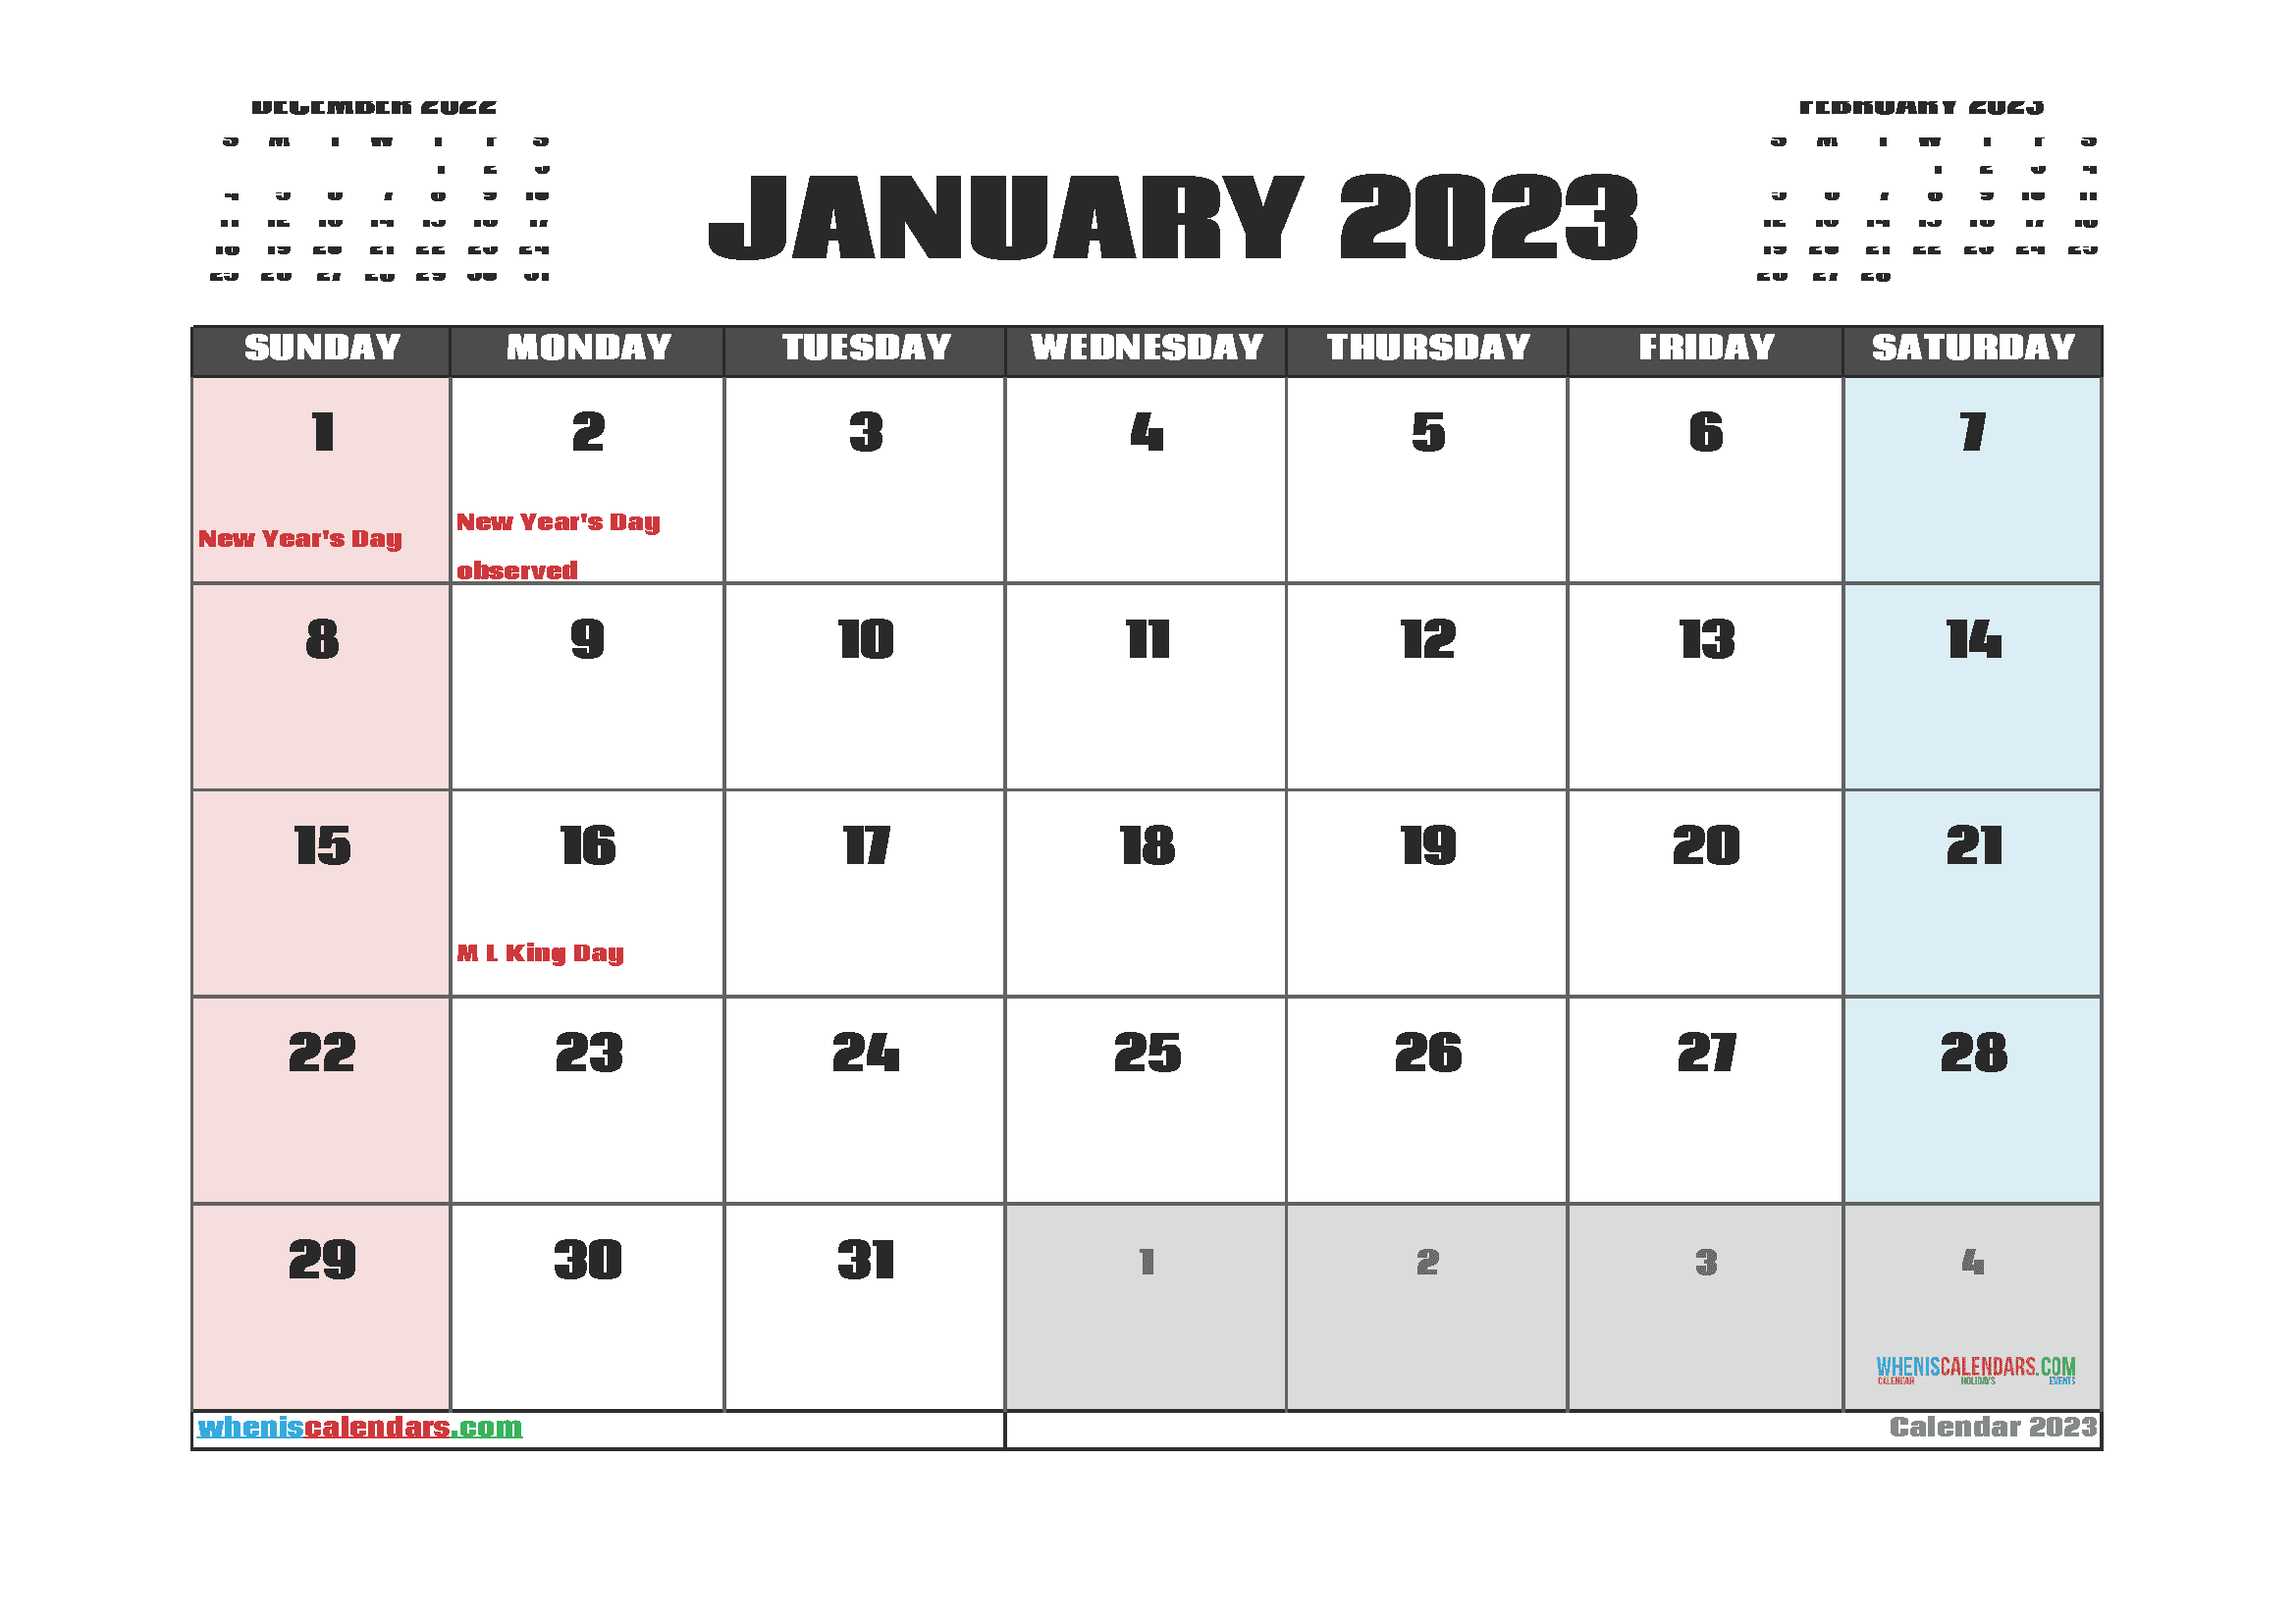 Free January 2023 Calendar Template